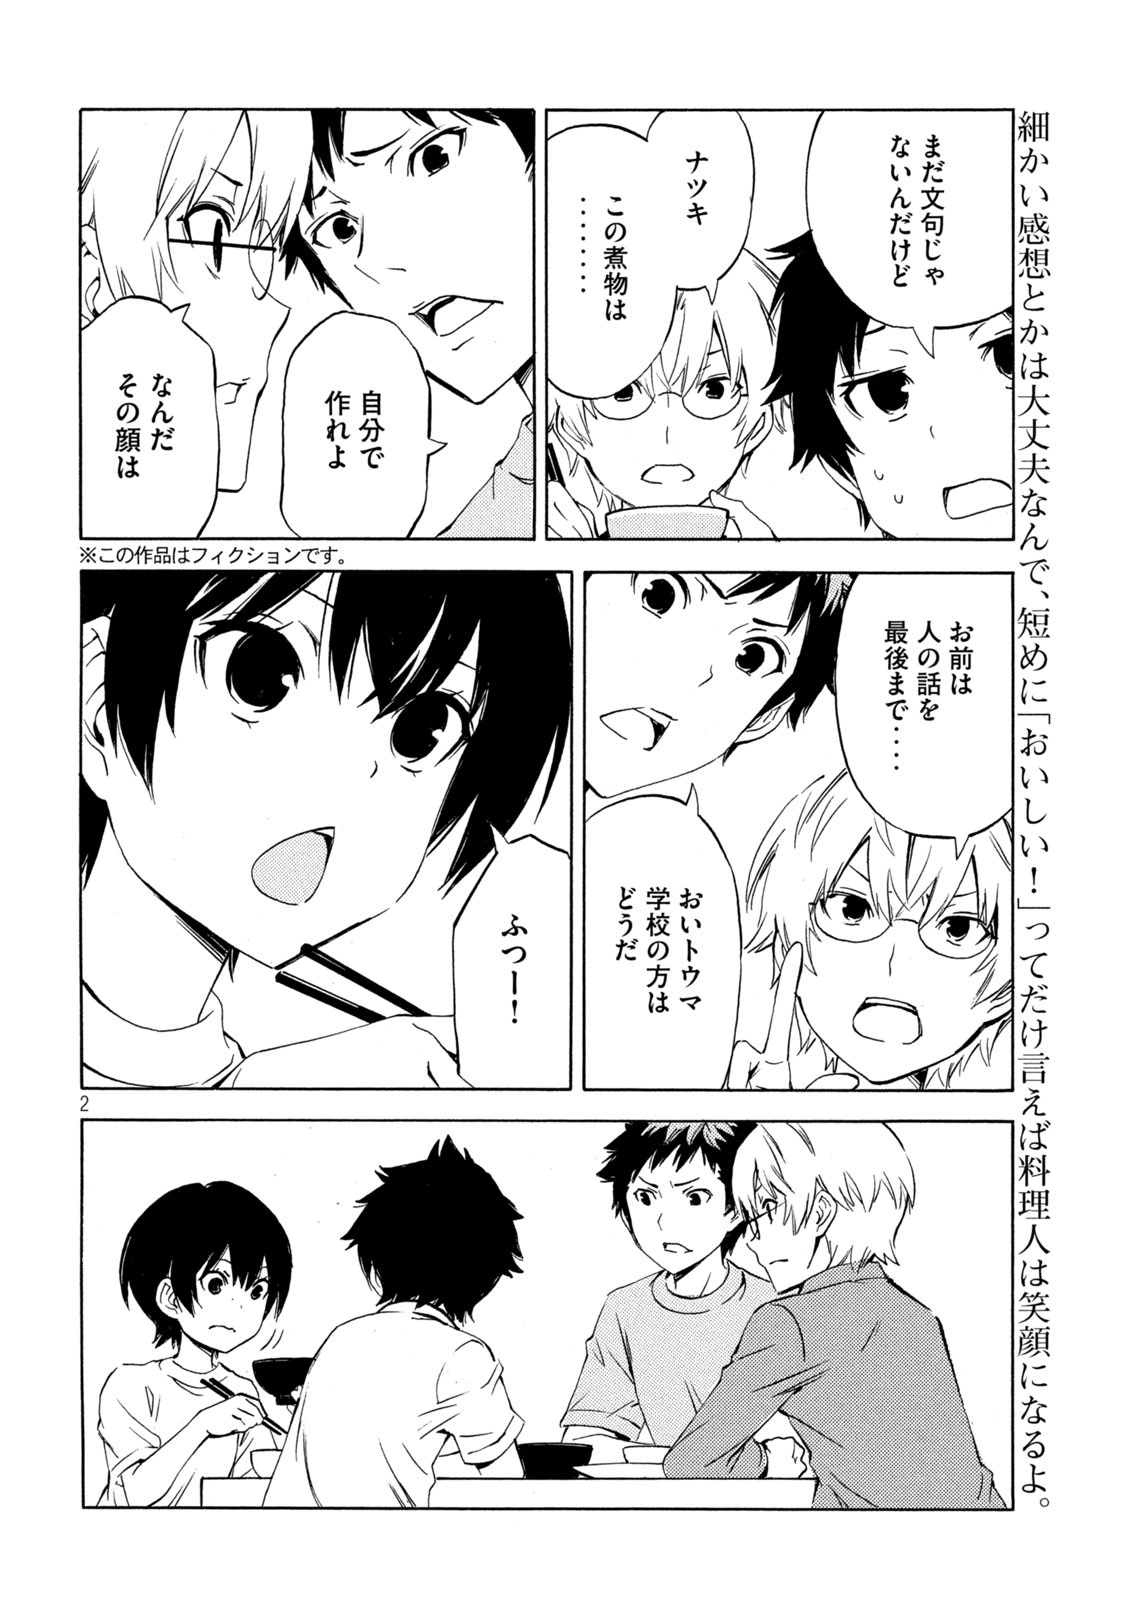 Minami-ke - Chapter 484 - Page 2